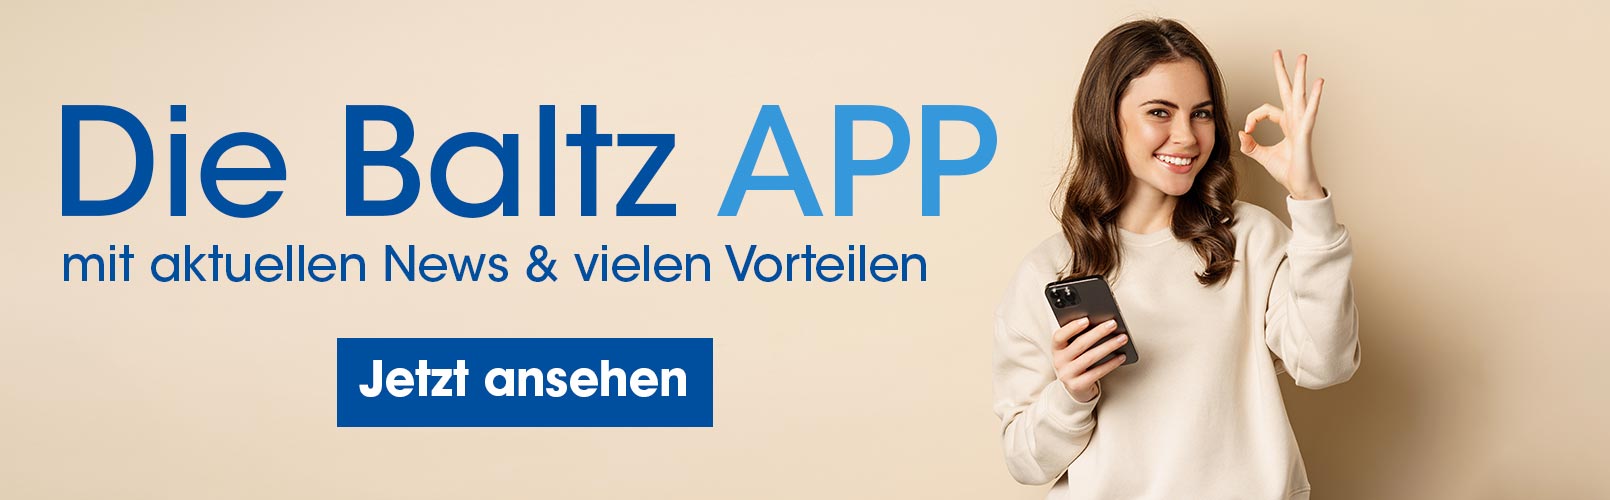 baltz-app-web-01